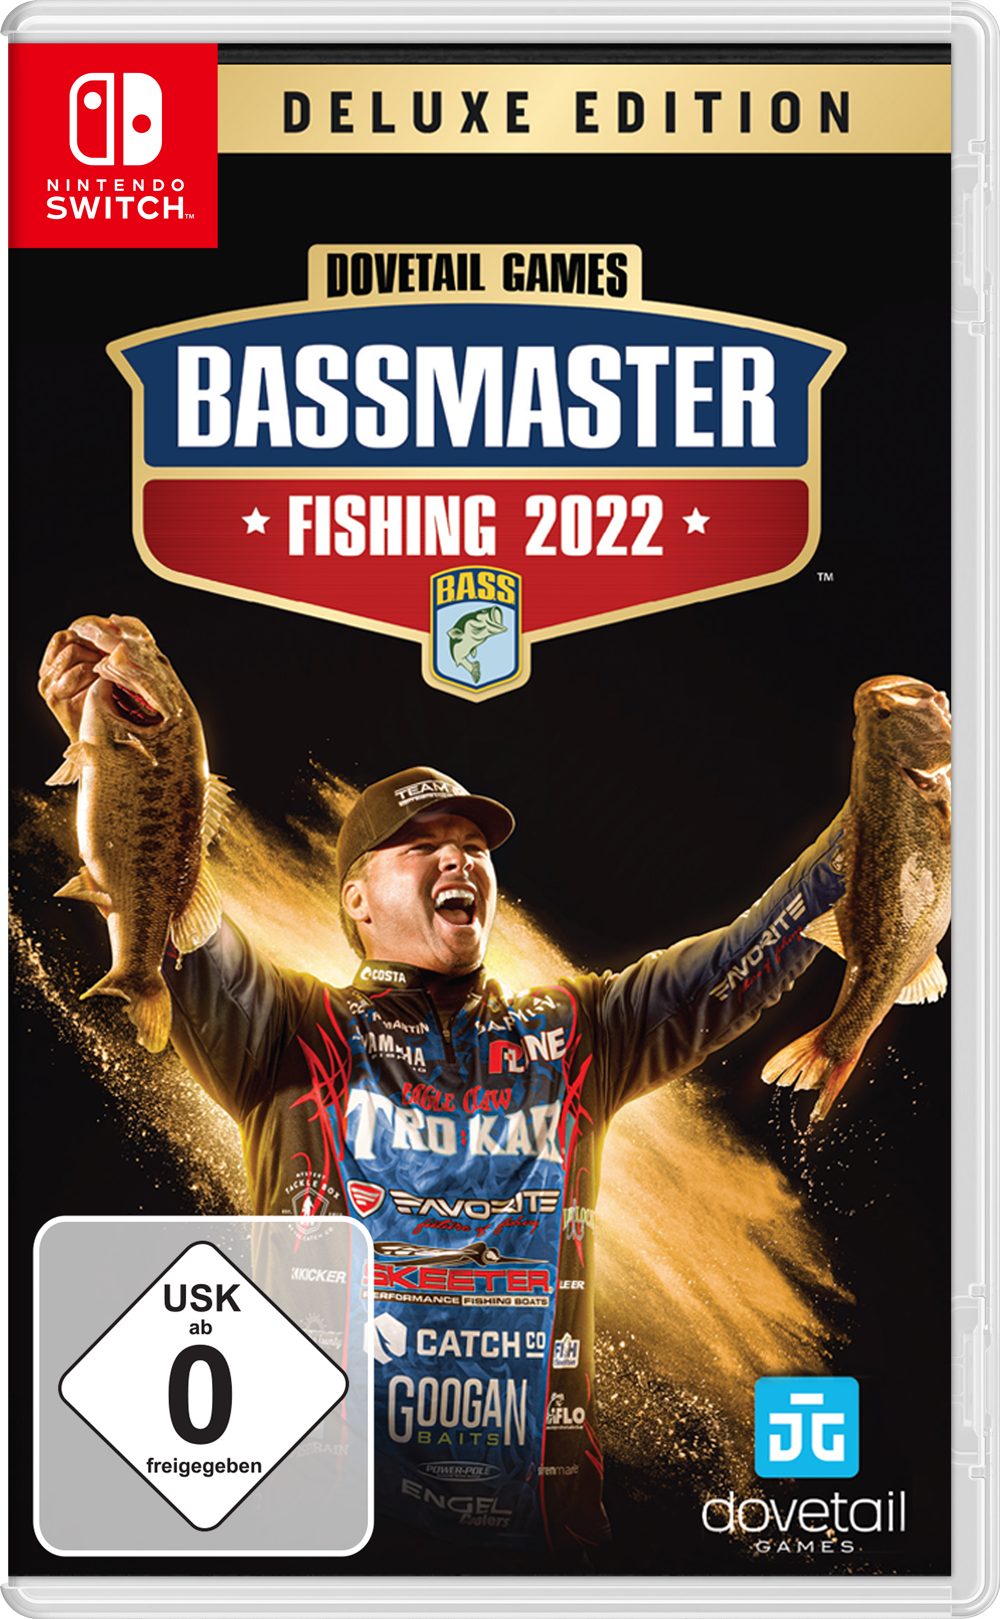 2022 Deluxe Nintendo Switch Fishing Edition Bassmaster